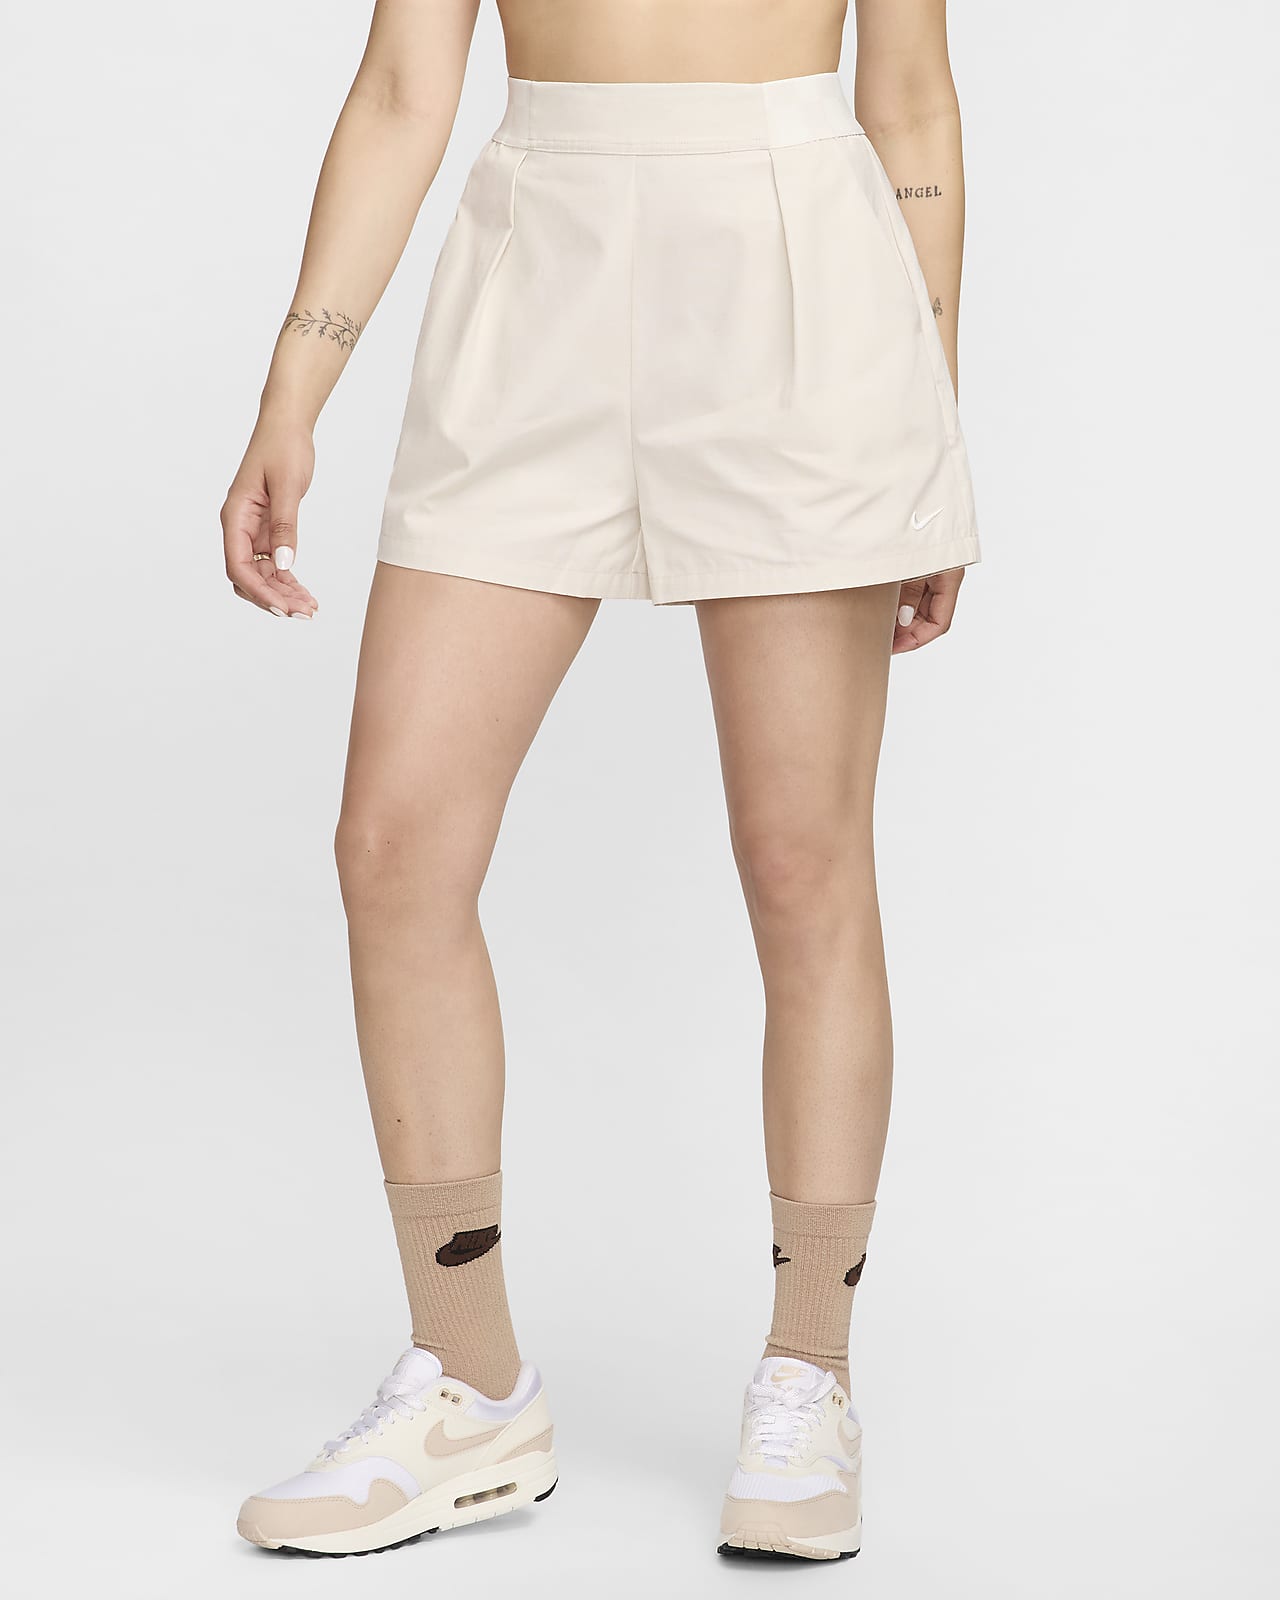 Nike Sportswear Collection Pantalón corto de 8 cm y talle alto - Mujer